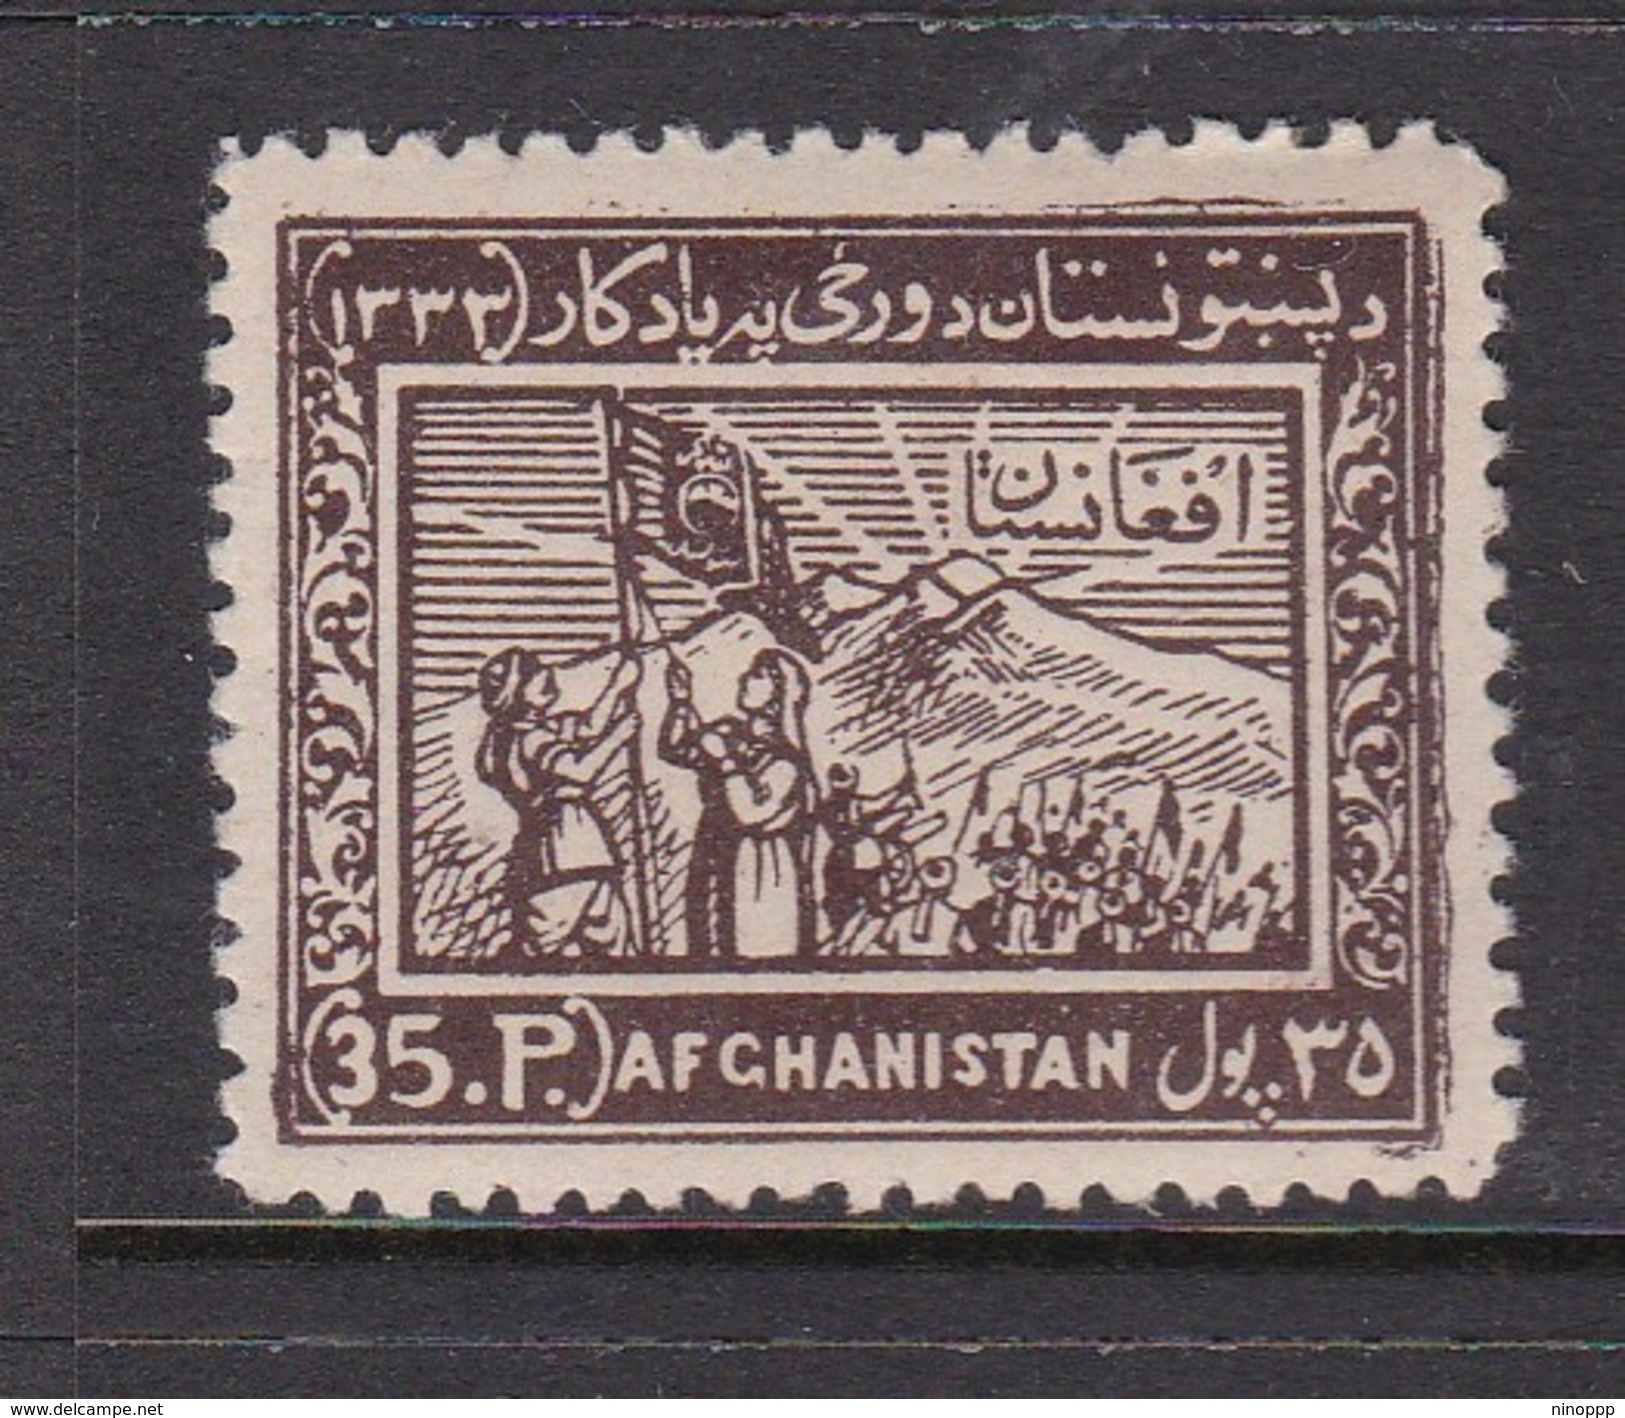 Afghanistan SG 385 1954 Pashtunistan Day 35p Brown MNH - Afghanistan